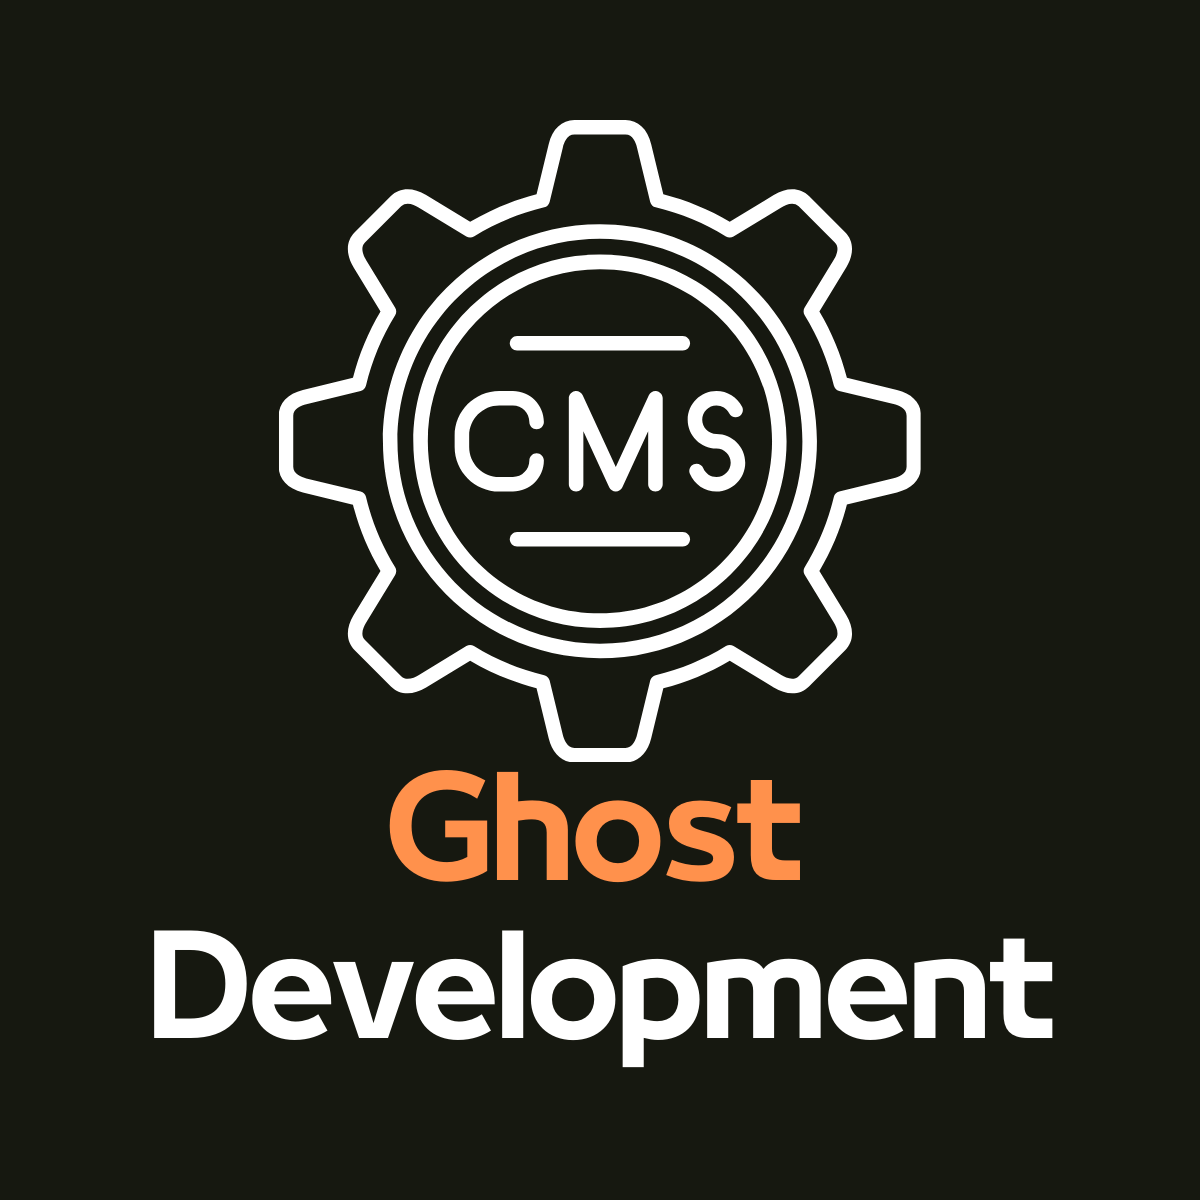 Ghost Development Company in India